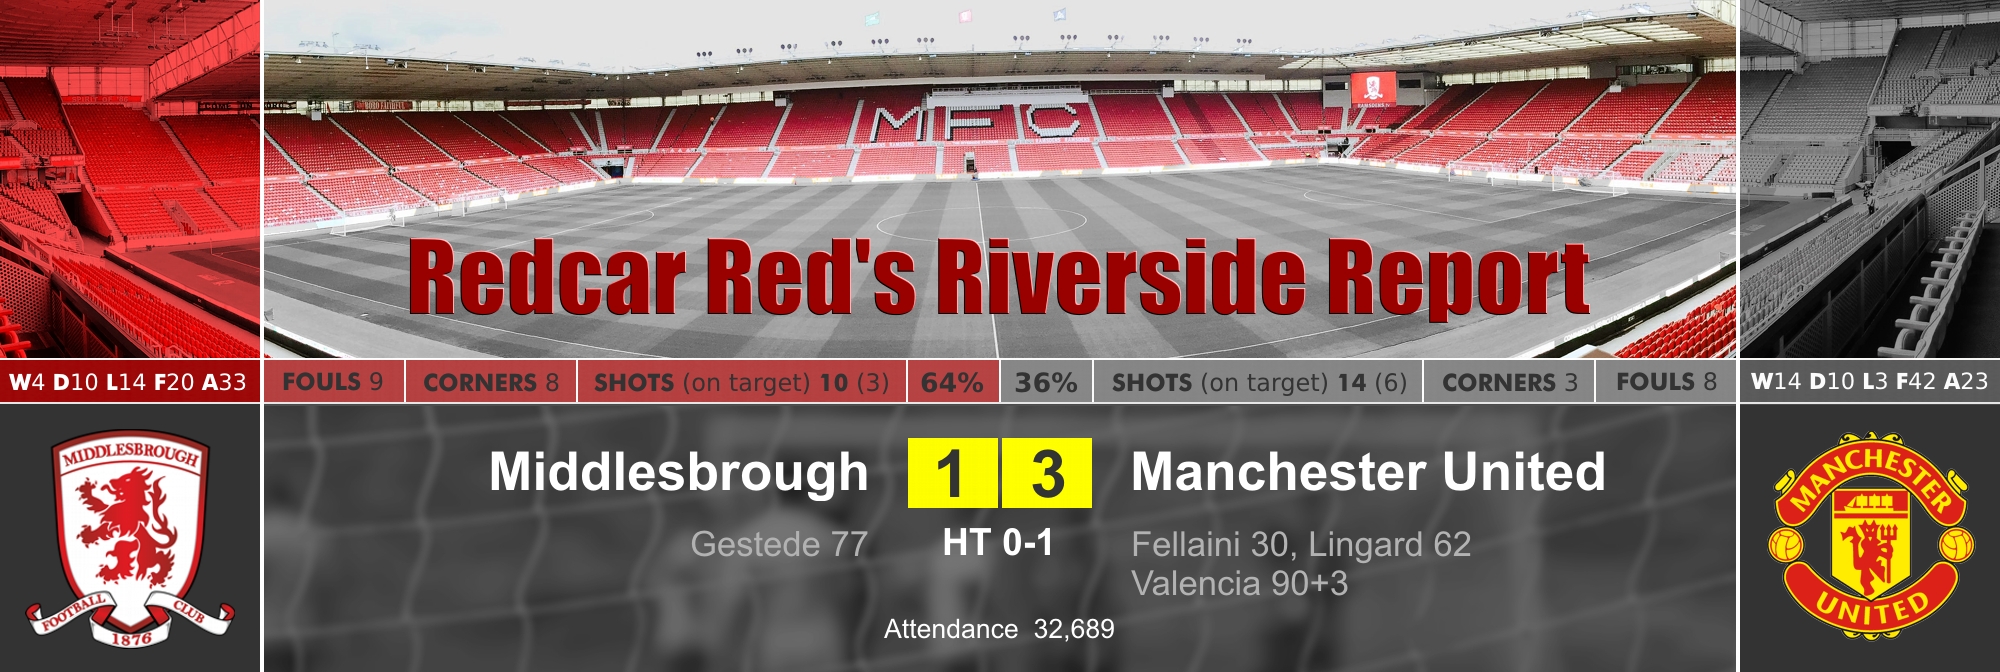 Redcar Red Report - Man Utd